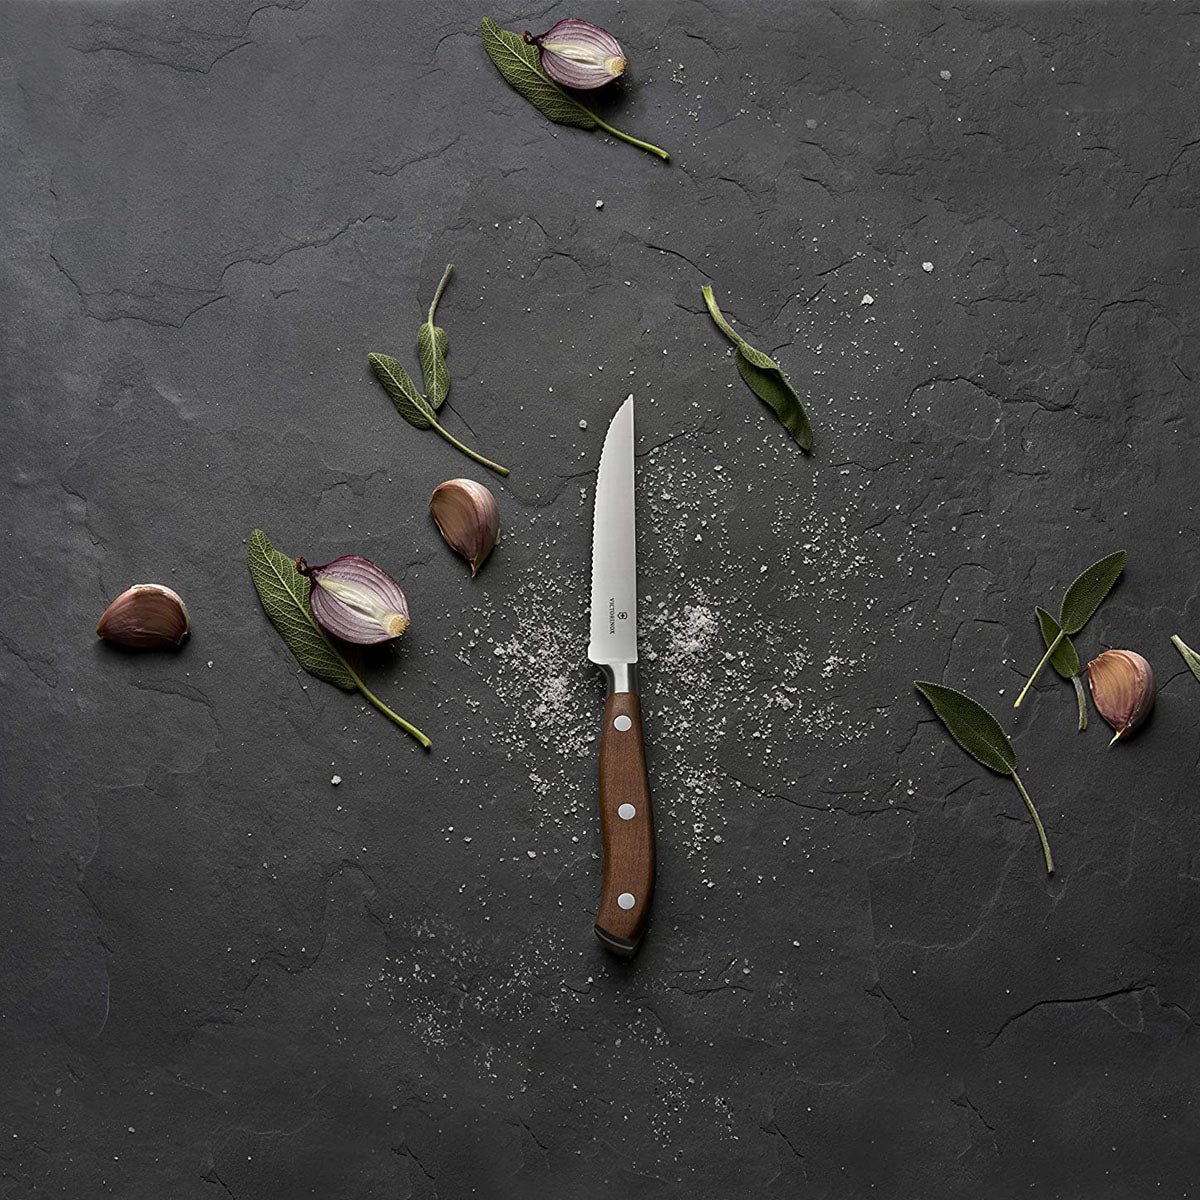 Victorinox Grand Maitre Wood 4.5 Steak Knife at Swiss Knife Shop